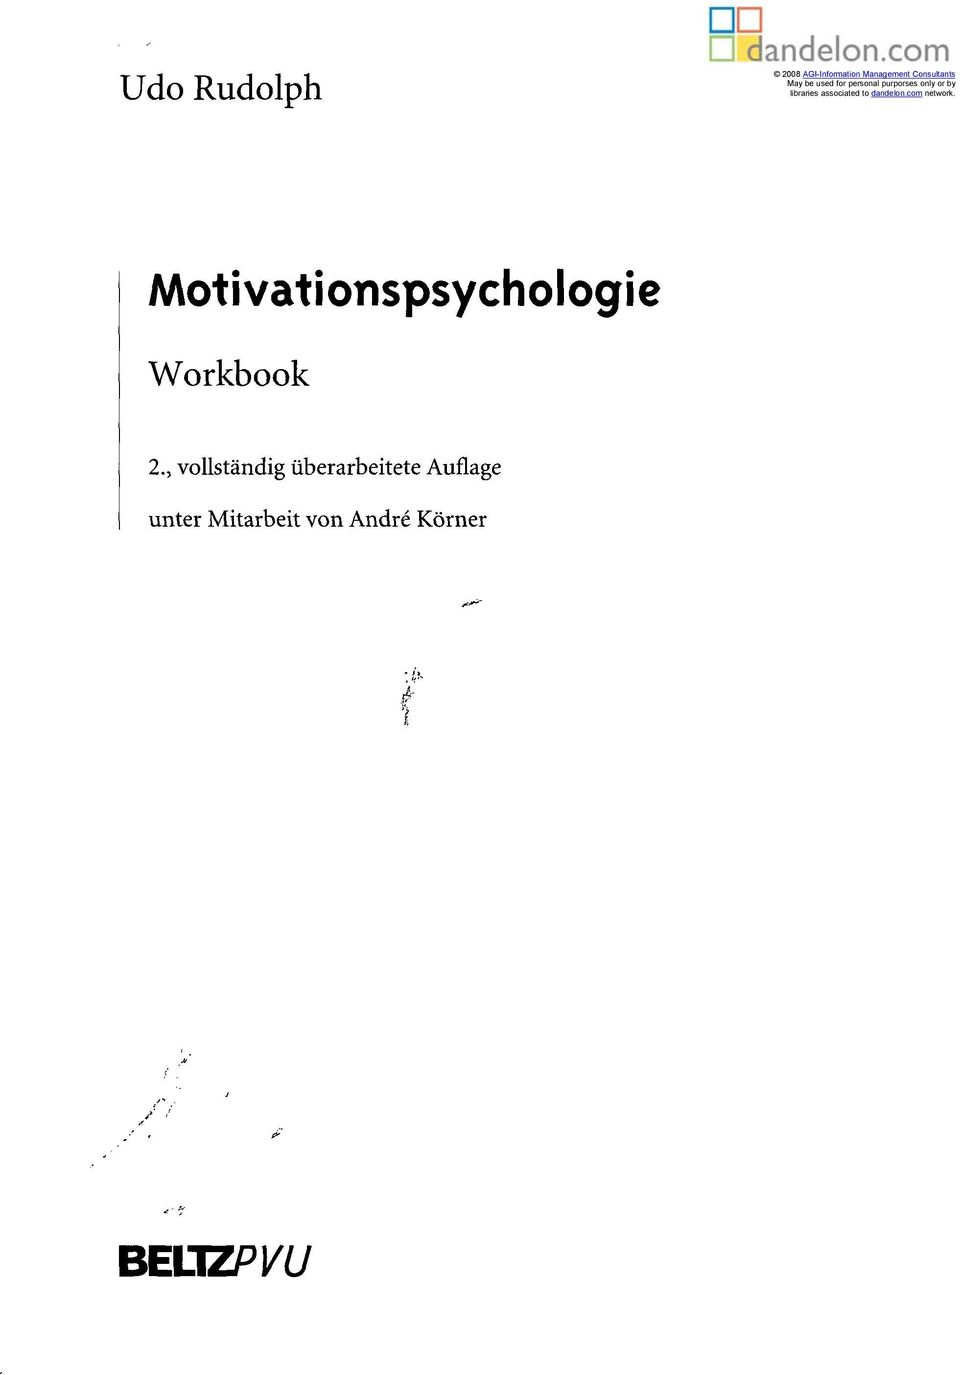 dandelon.com network. Motivationspsychologie Workbook 2.